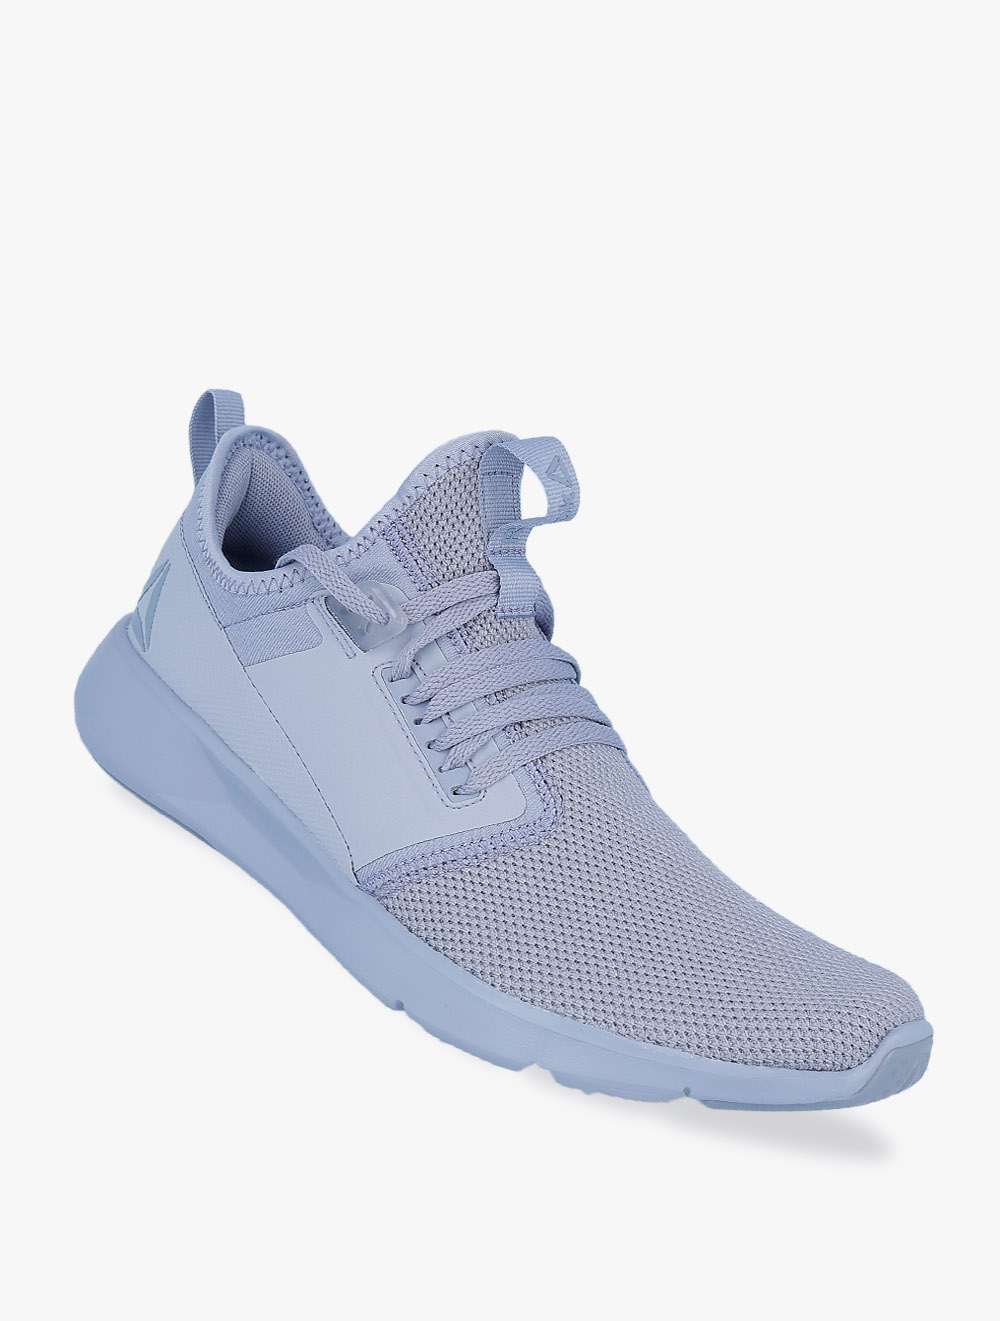 Reebok Plus Lite 2.0 Running Blue Sneaker Men/'s